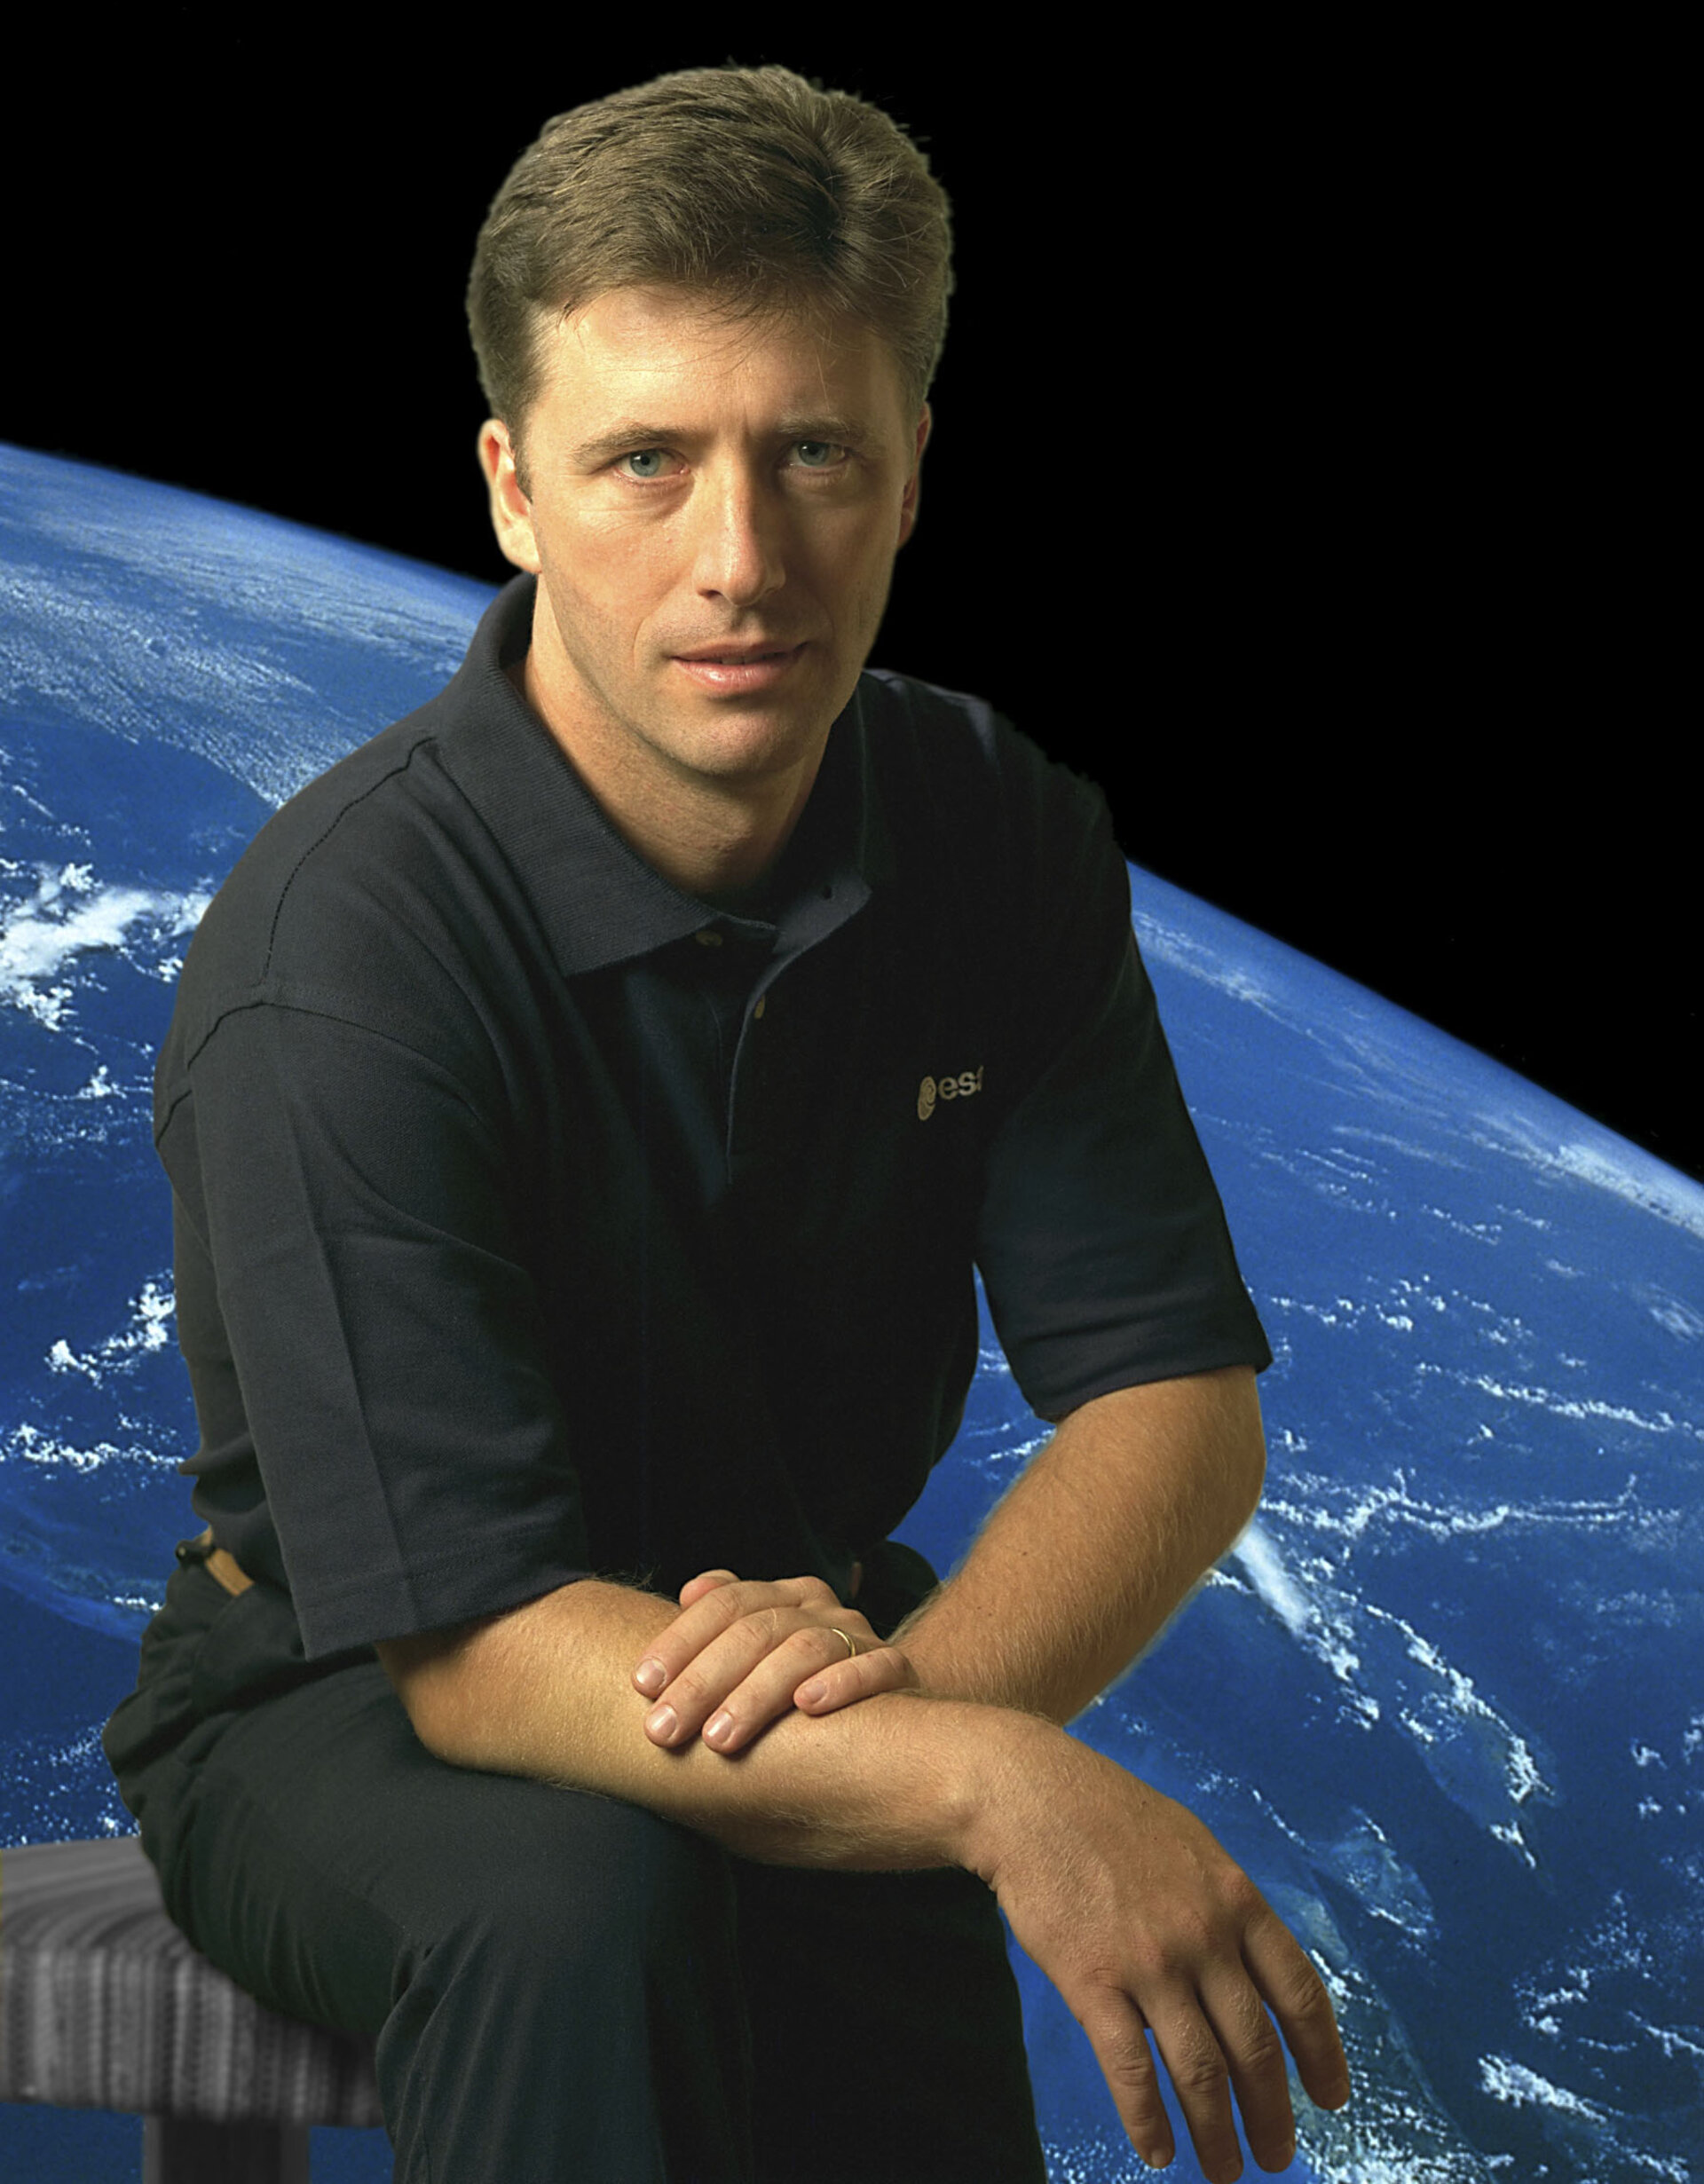 Roberto Vittori, Astronaut of the European Space Agency (ESA)